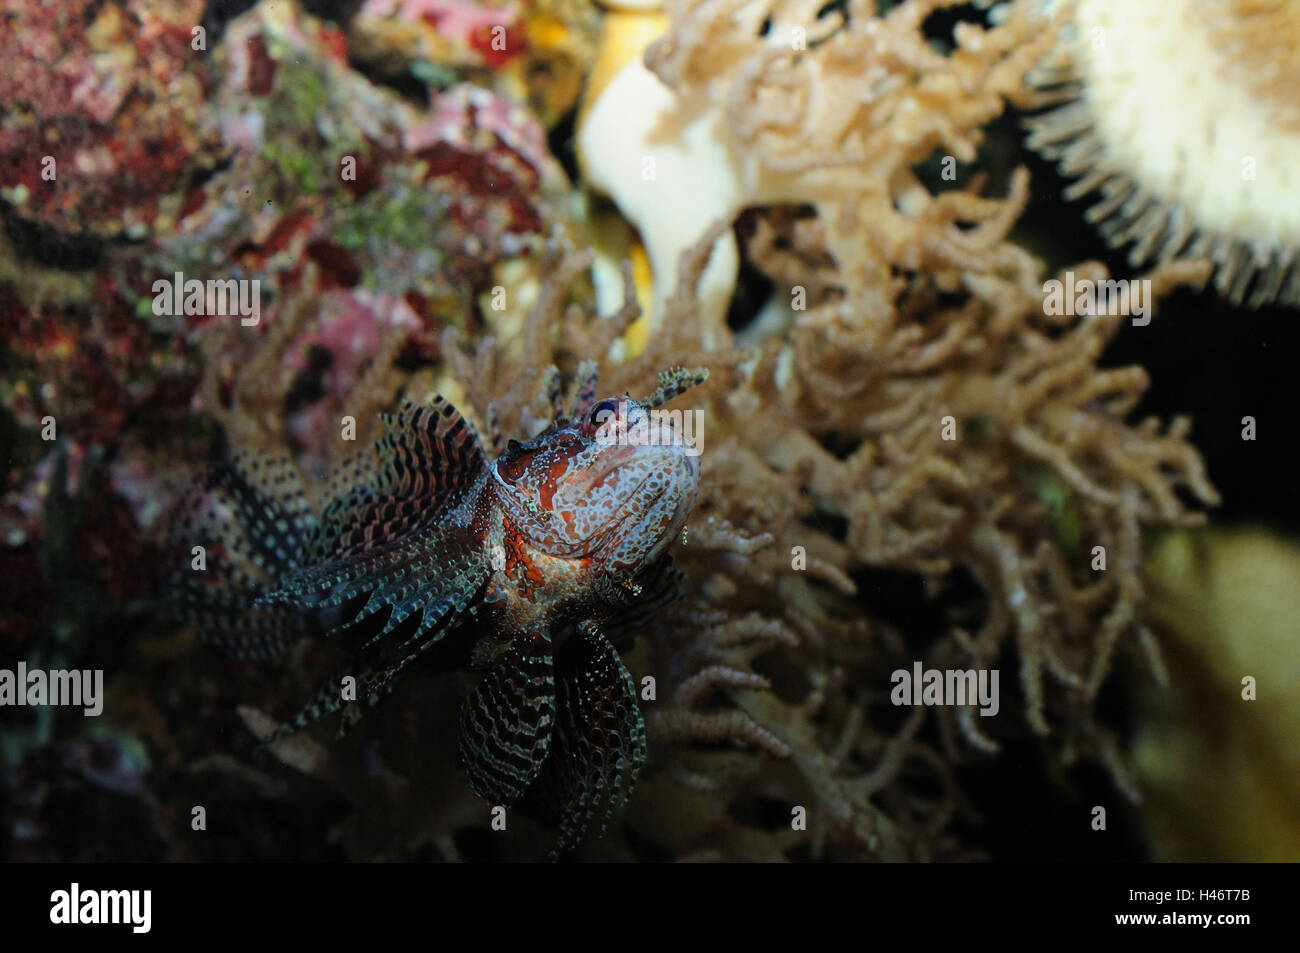 Dwarf lionfish, Dendrochirus brachypterus, underwater, front view, swimming, Stock Photo